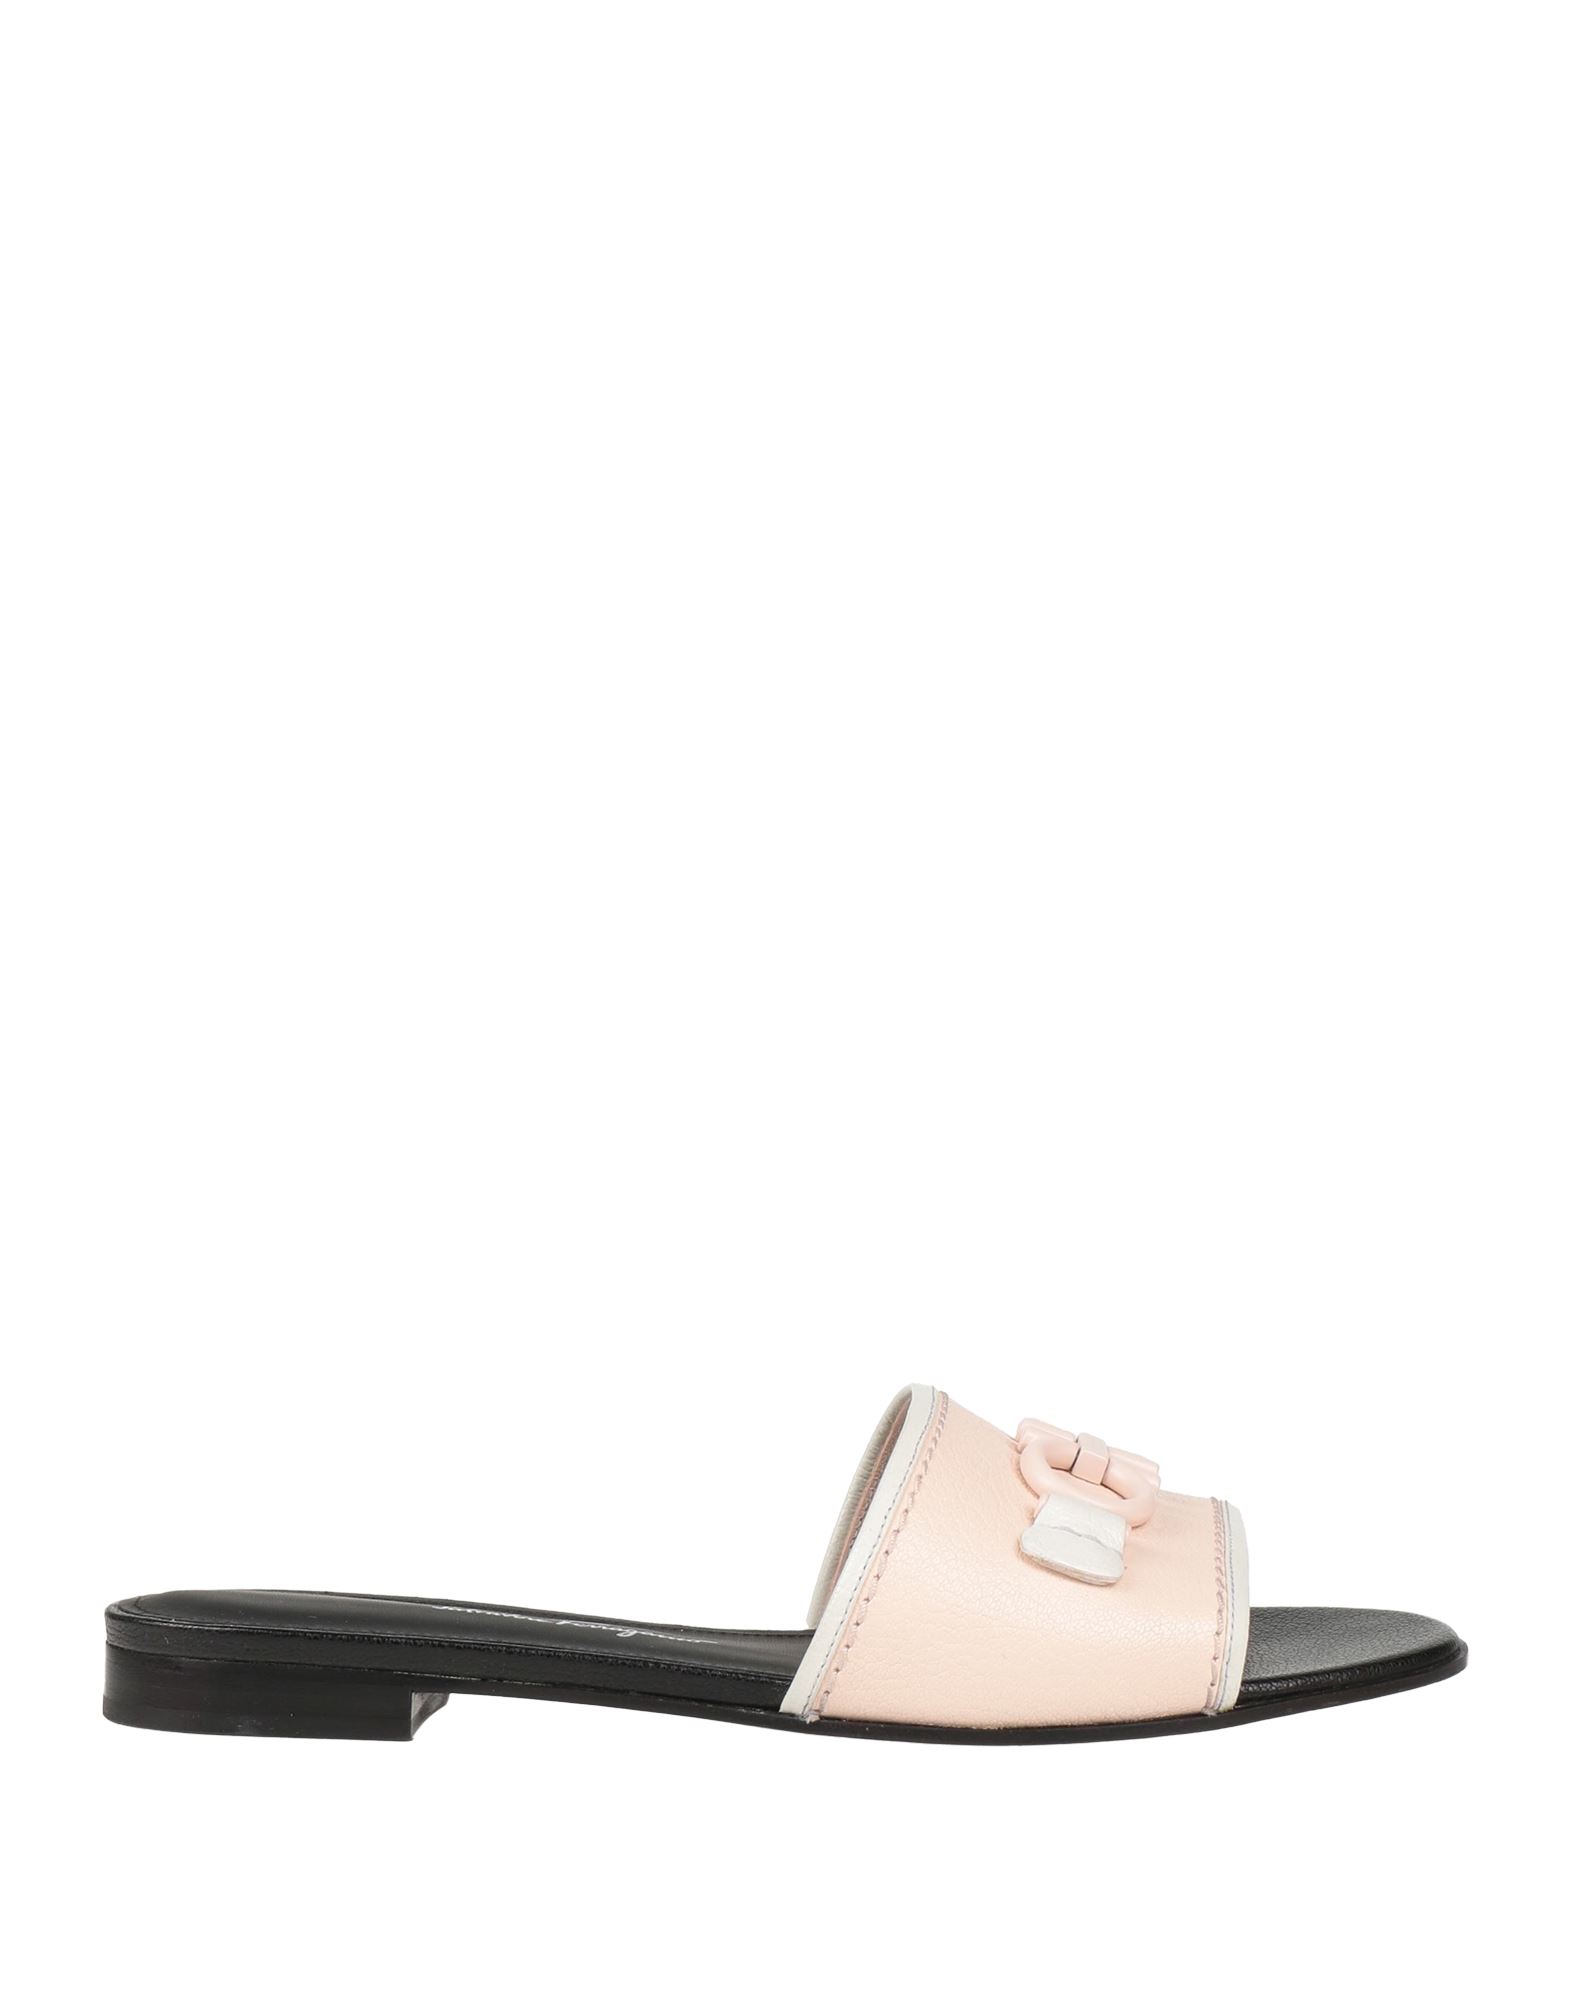 Ferragamo Woman Sandals Light Pink Size 7.5 Soft Leather In Pink Lemonade